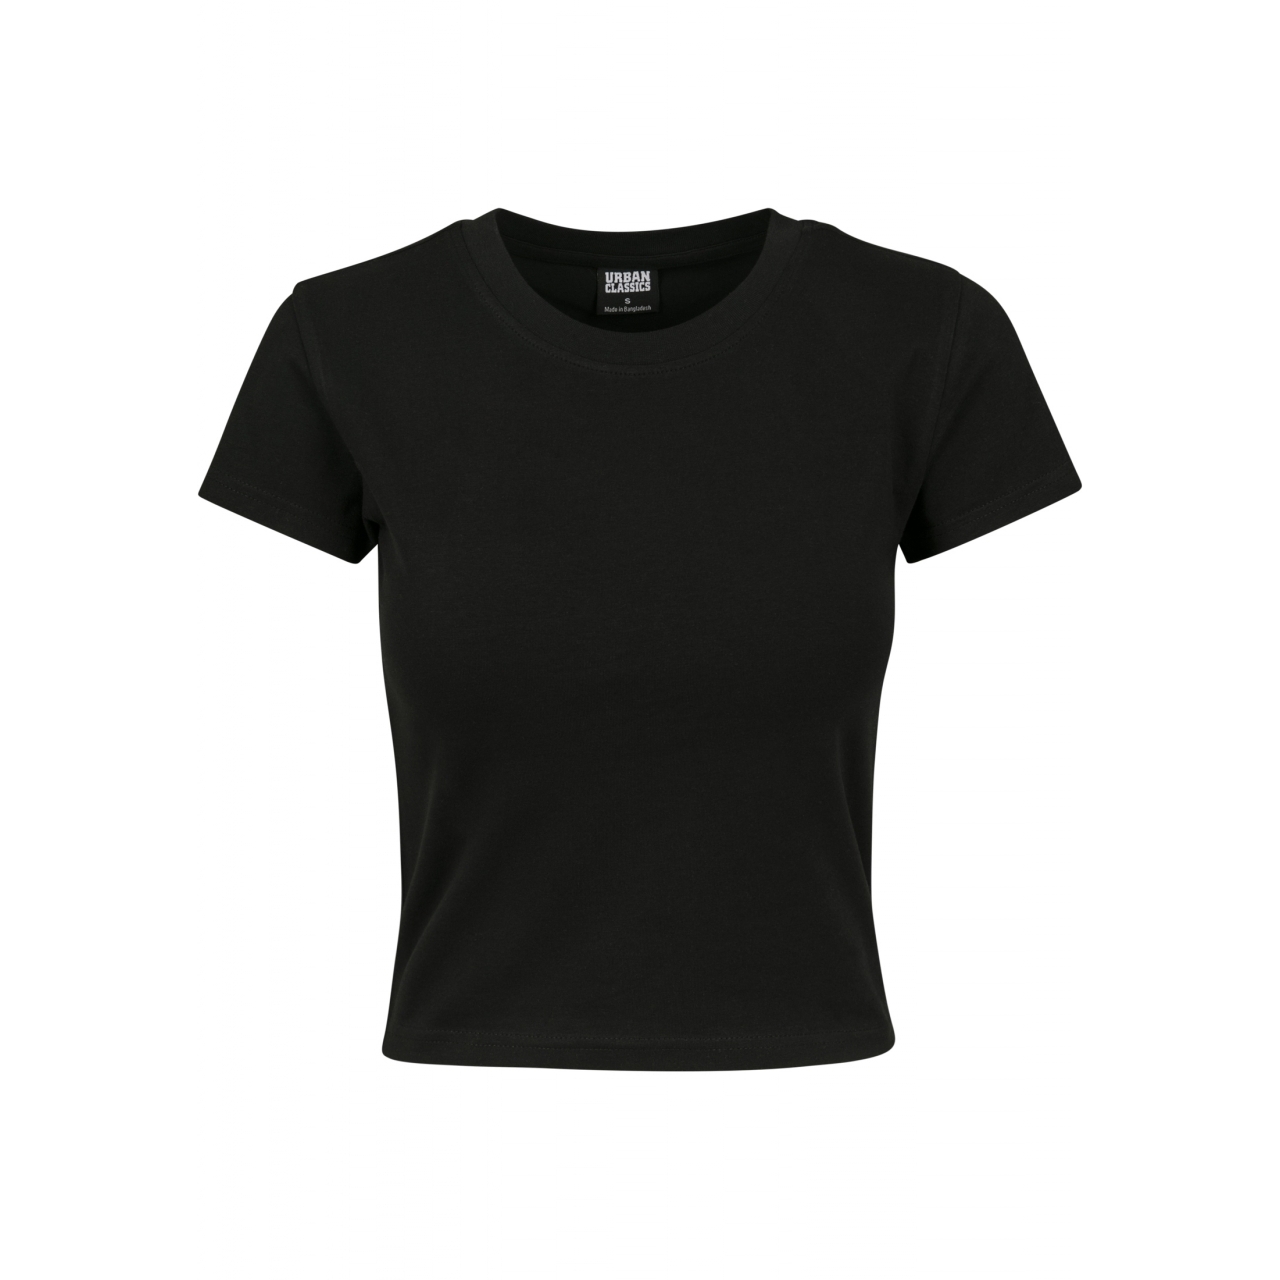 Triko dámské Urban Classics Ladies Stretch Jersey - černé, XL